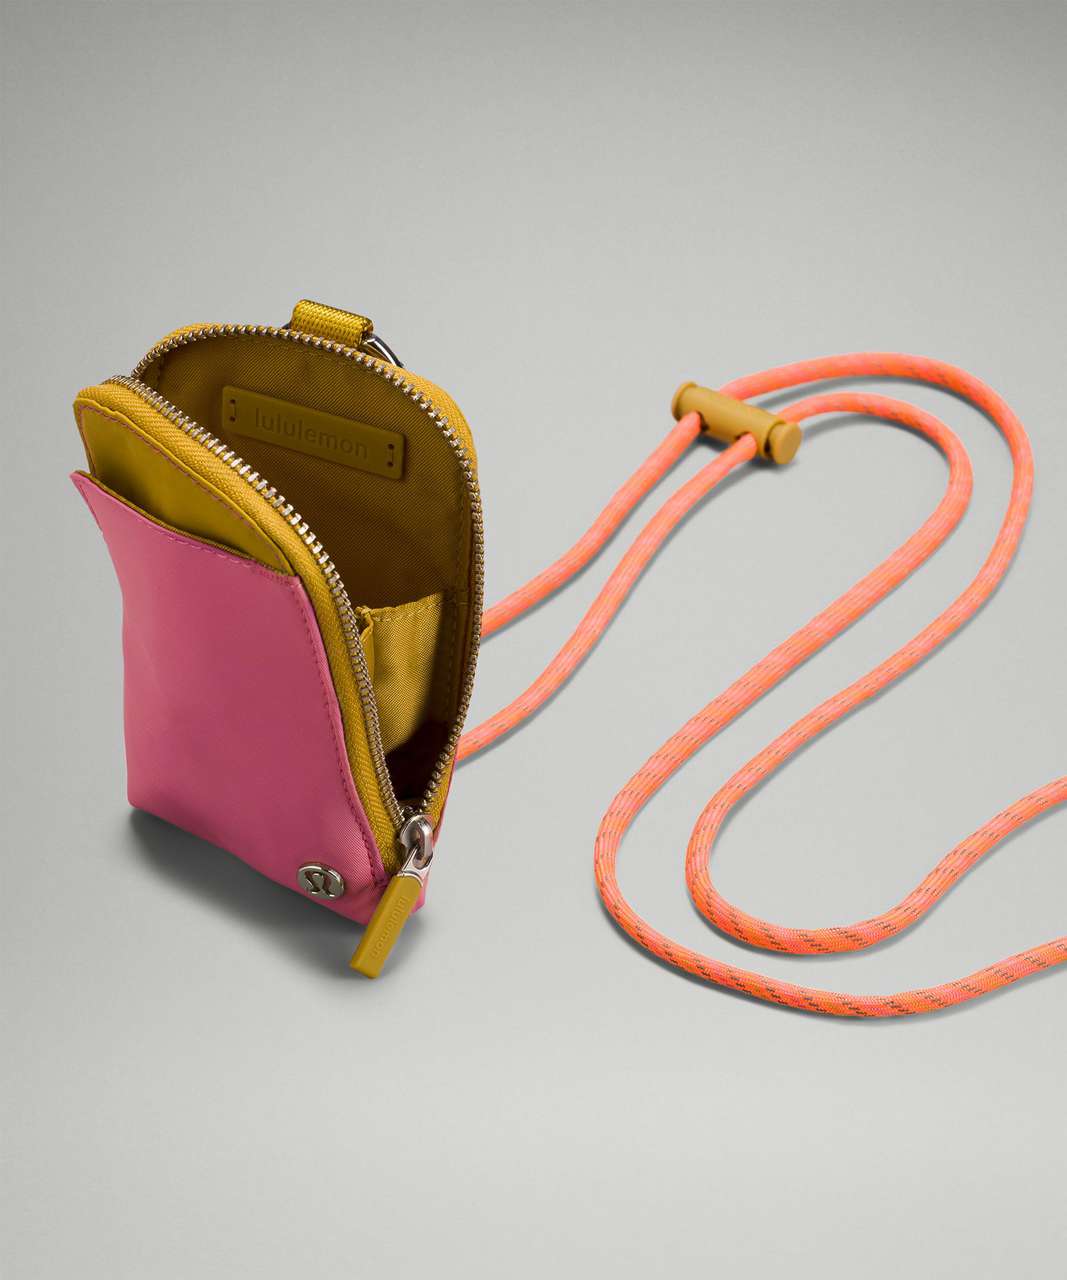 Lululemon Wearable Card Case - Pink Blossom / Parachute